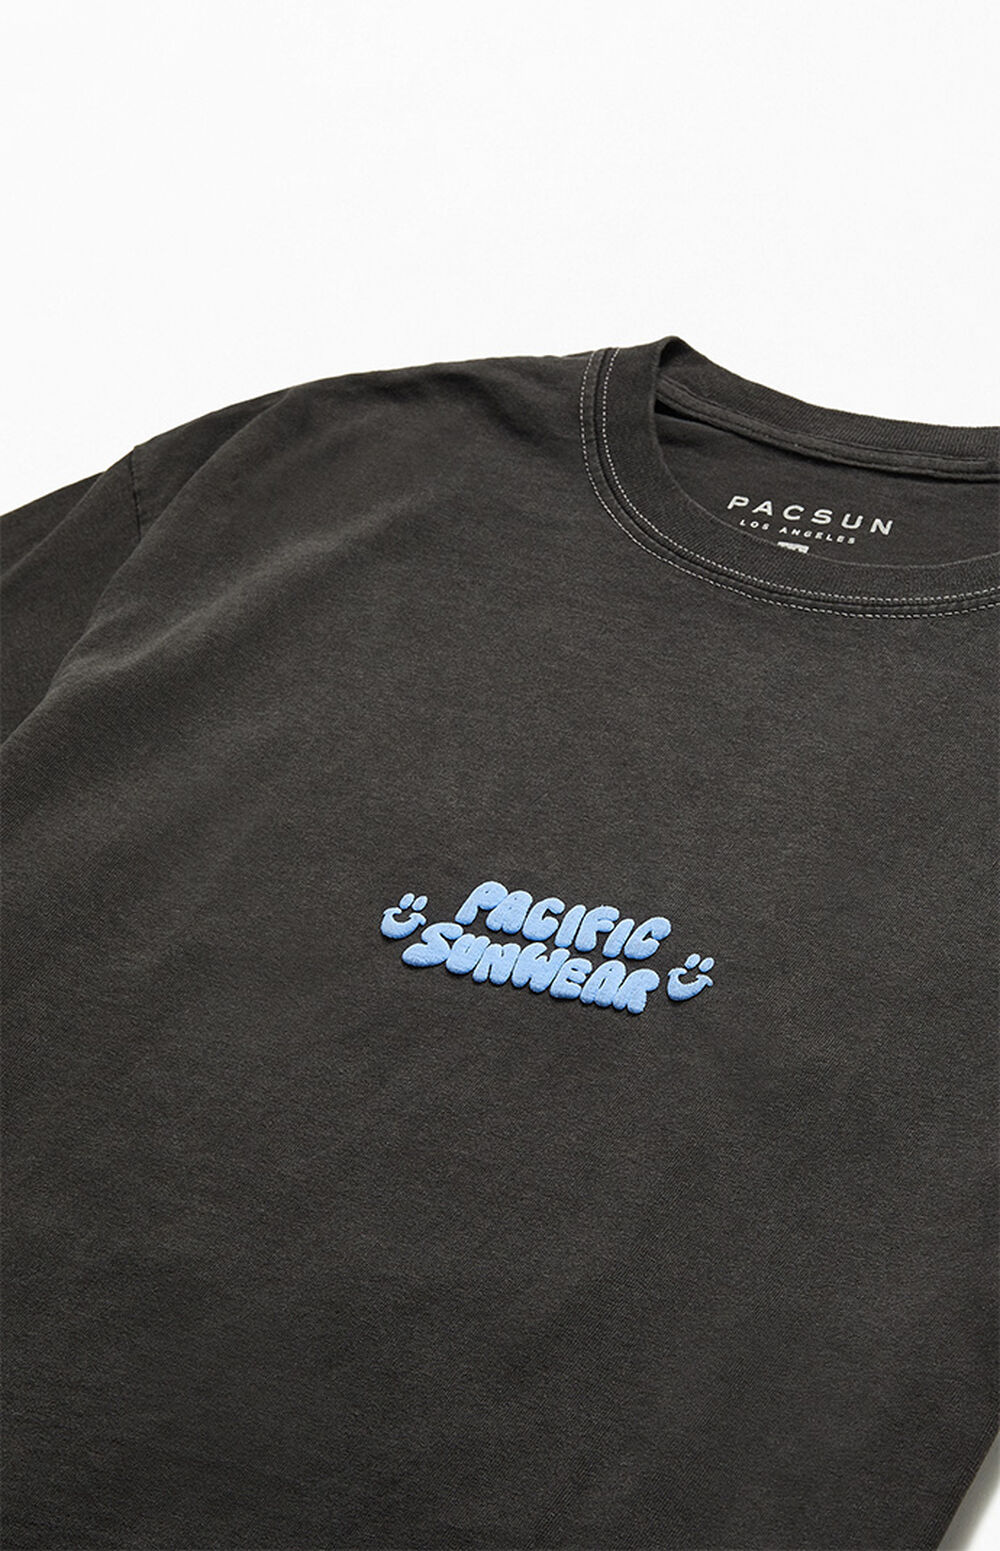 PacSun Pacific Sunwear Grateful T-Shirt | PacSun